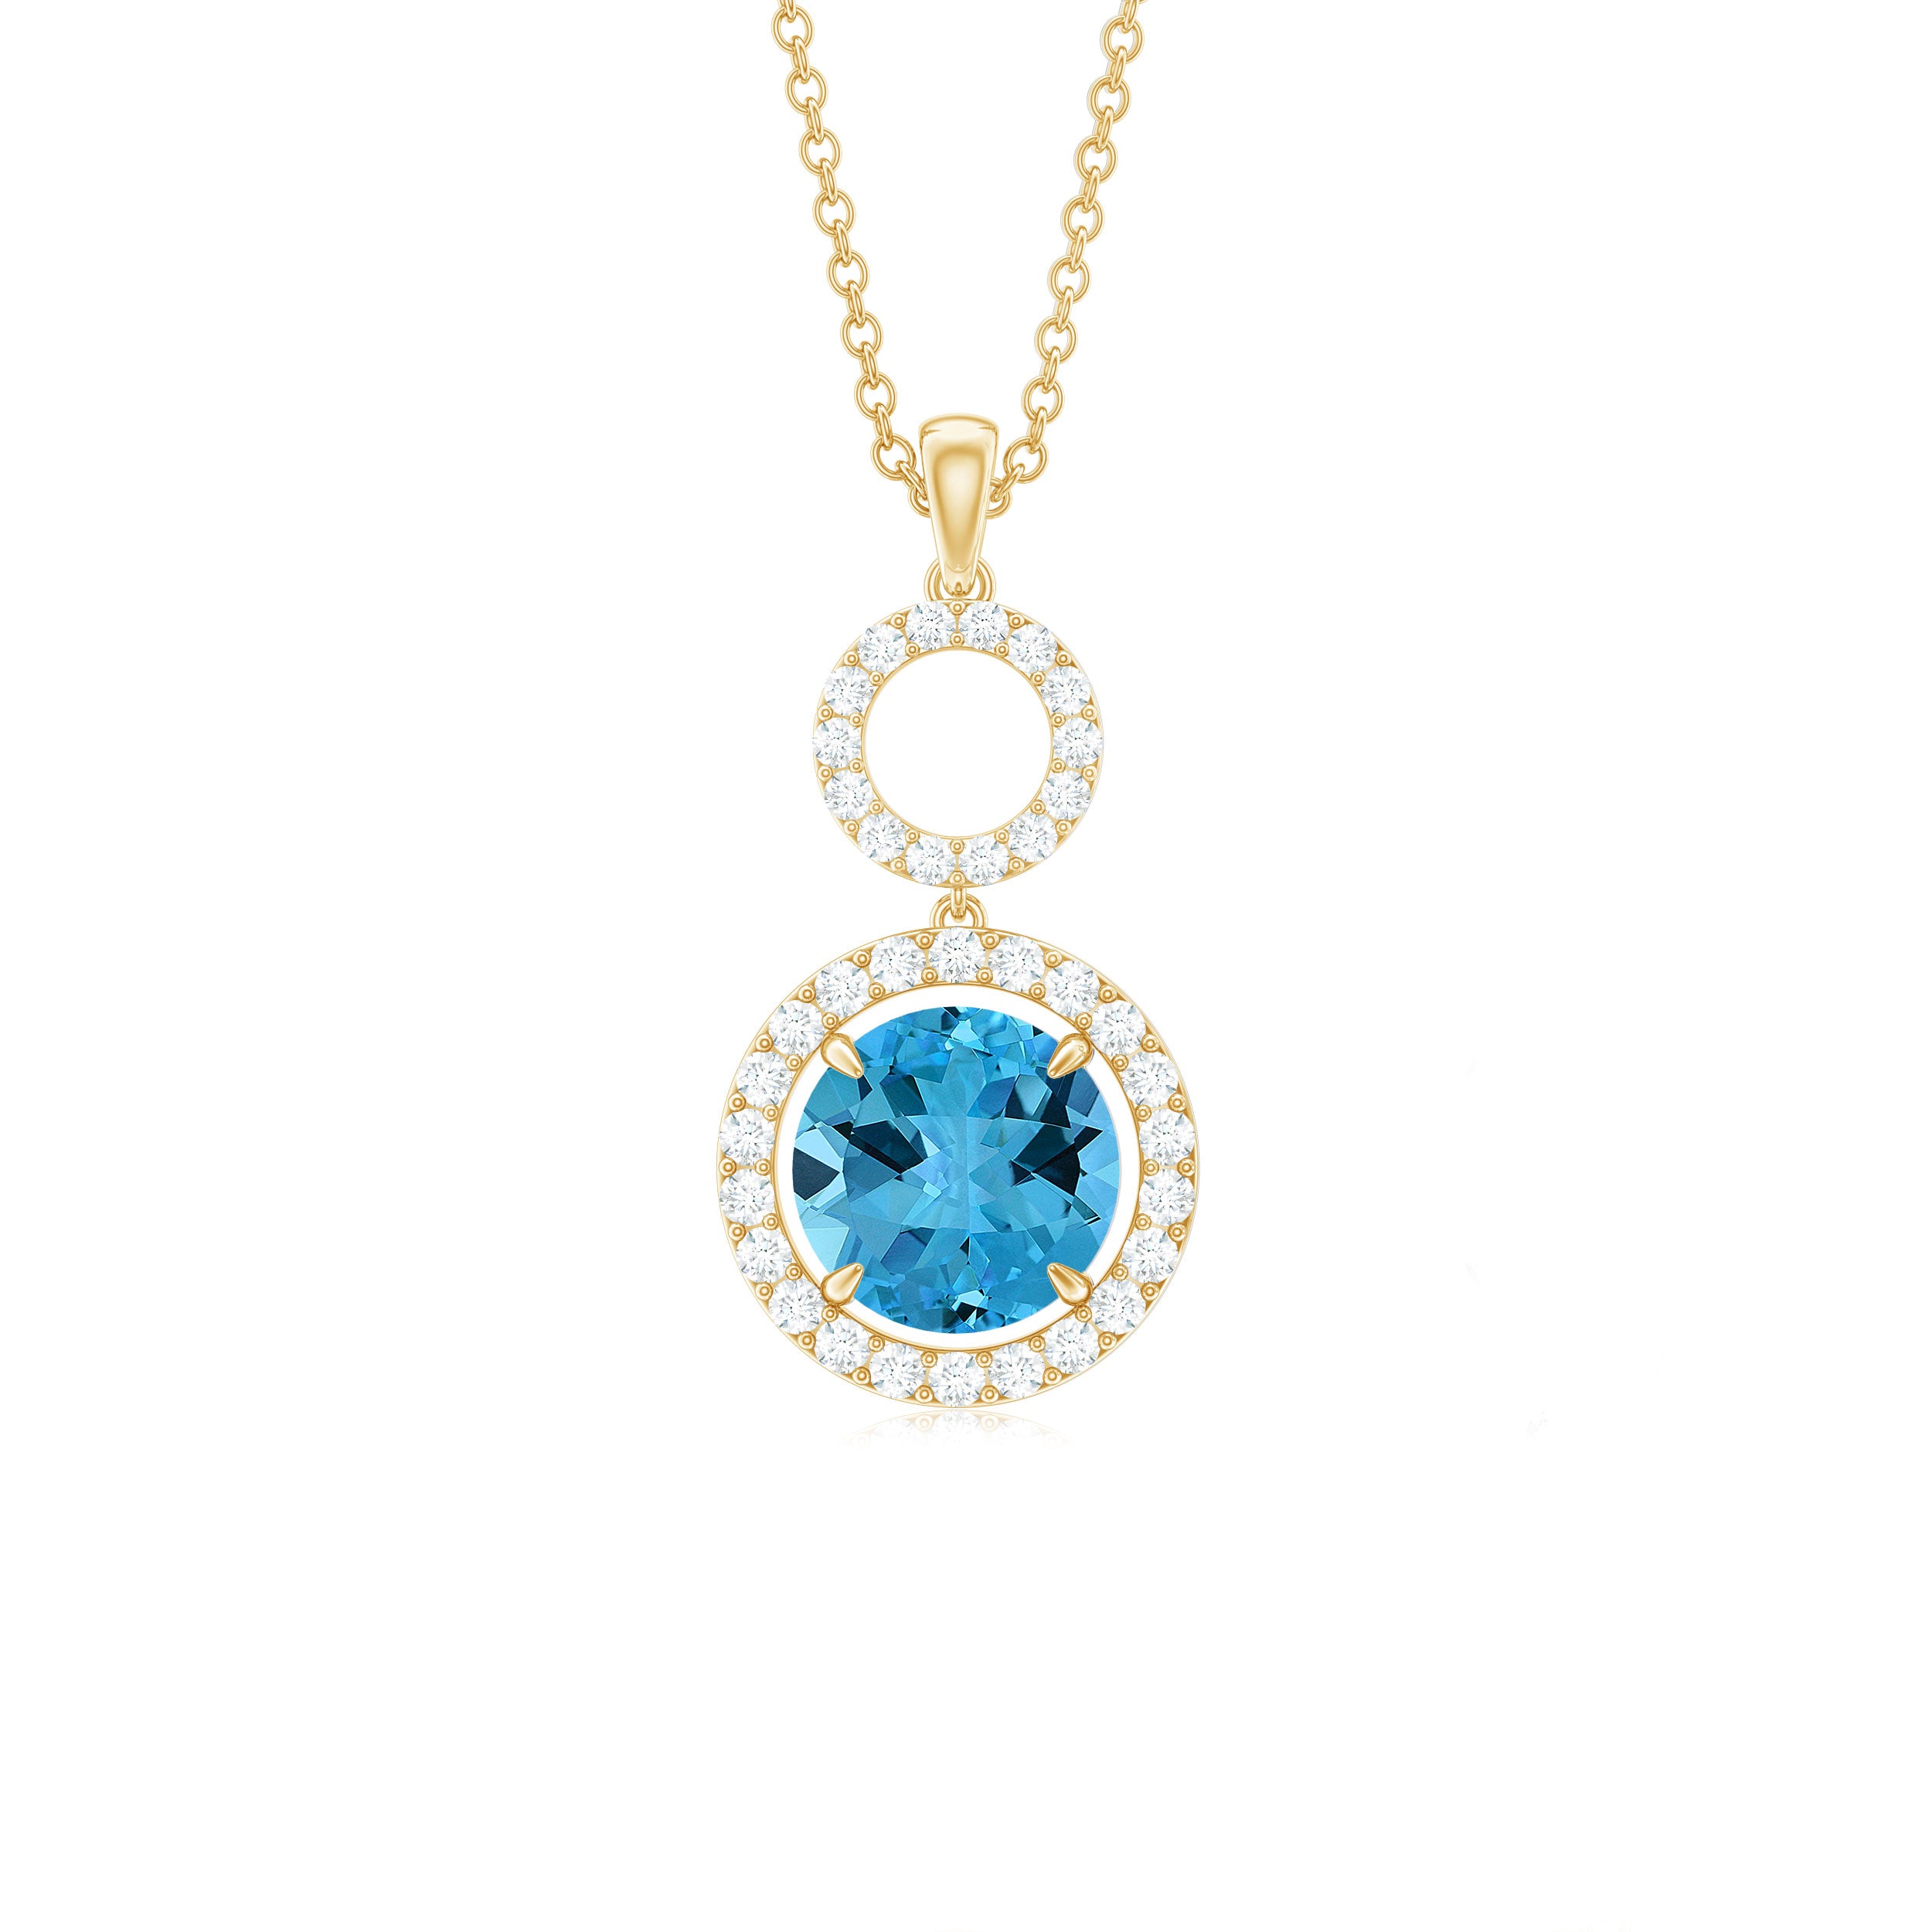 2.50 CT Swiss Blue Topaz Dangle Necklace with Diamond Halo Swiss Blue Topaz - ( AAA ) - Quality - Rosec Jewels